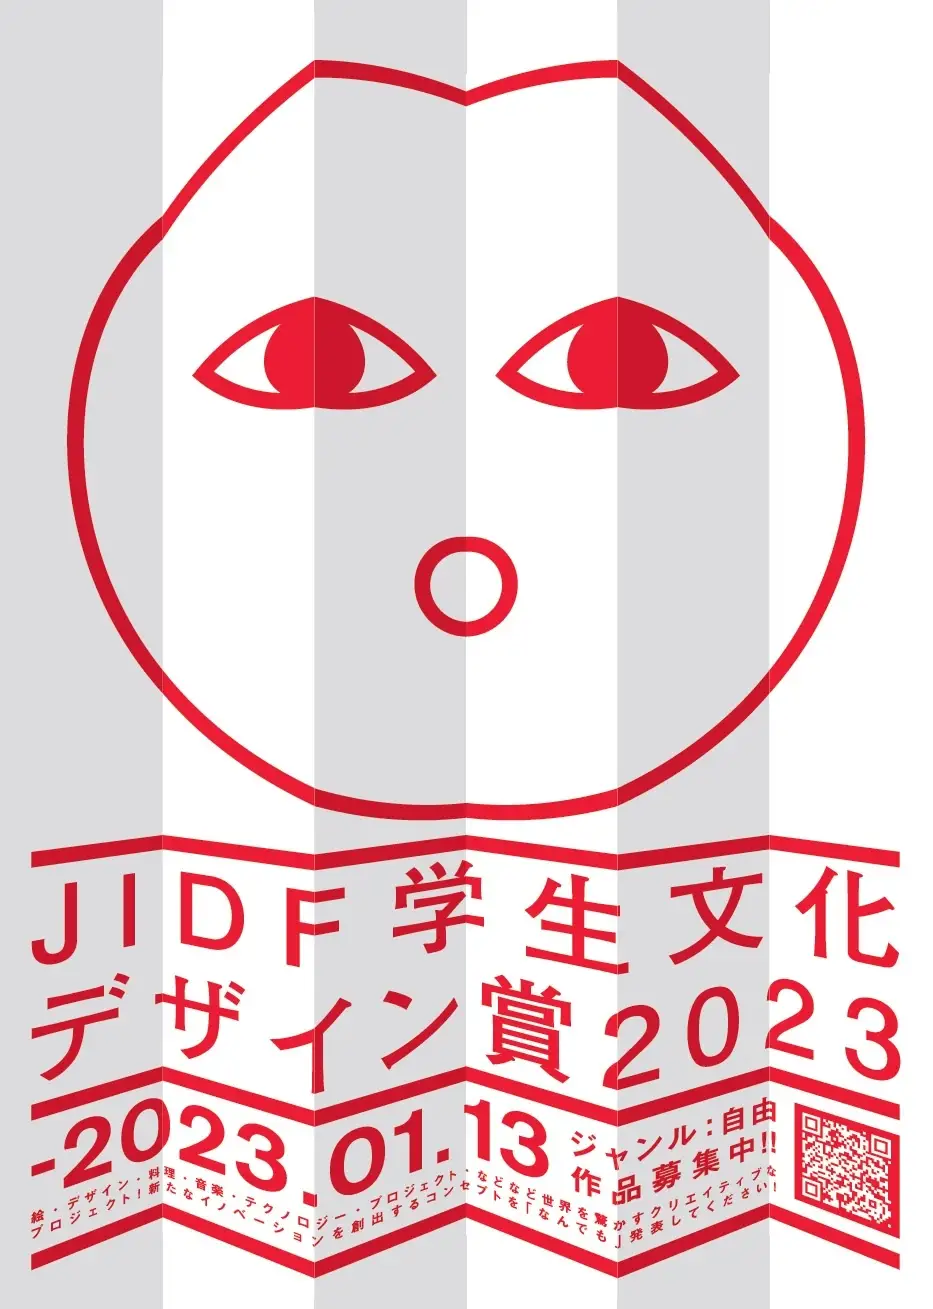 JIDF学生文化デザイン賞2023